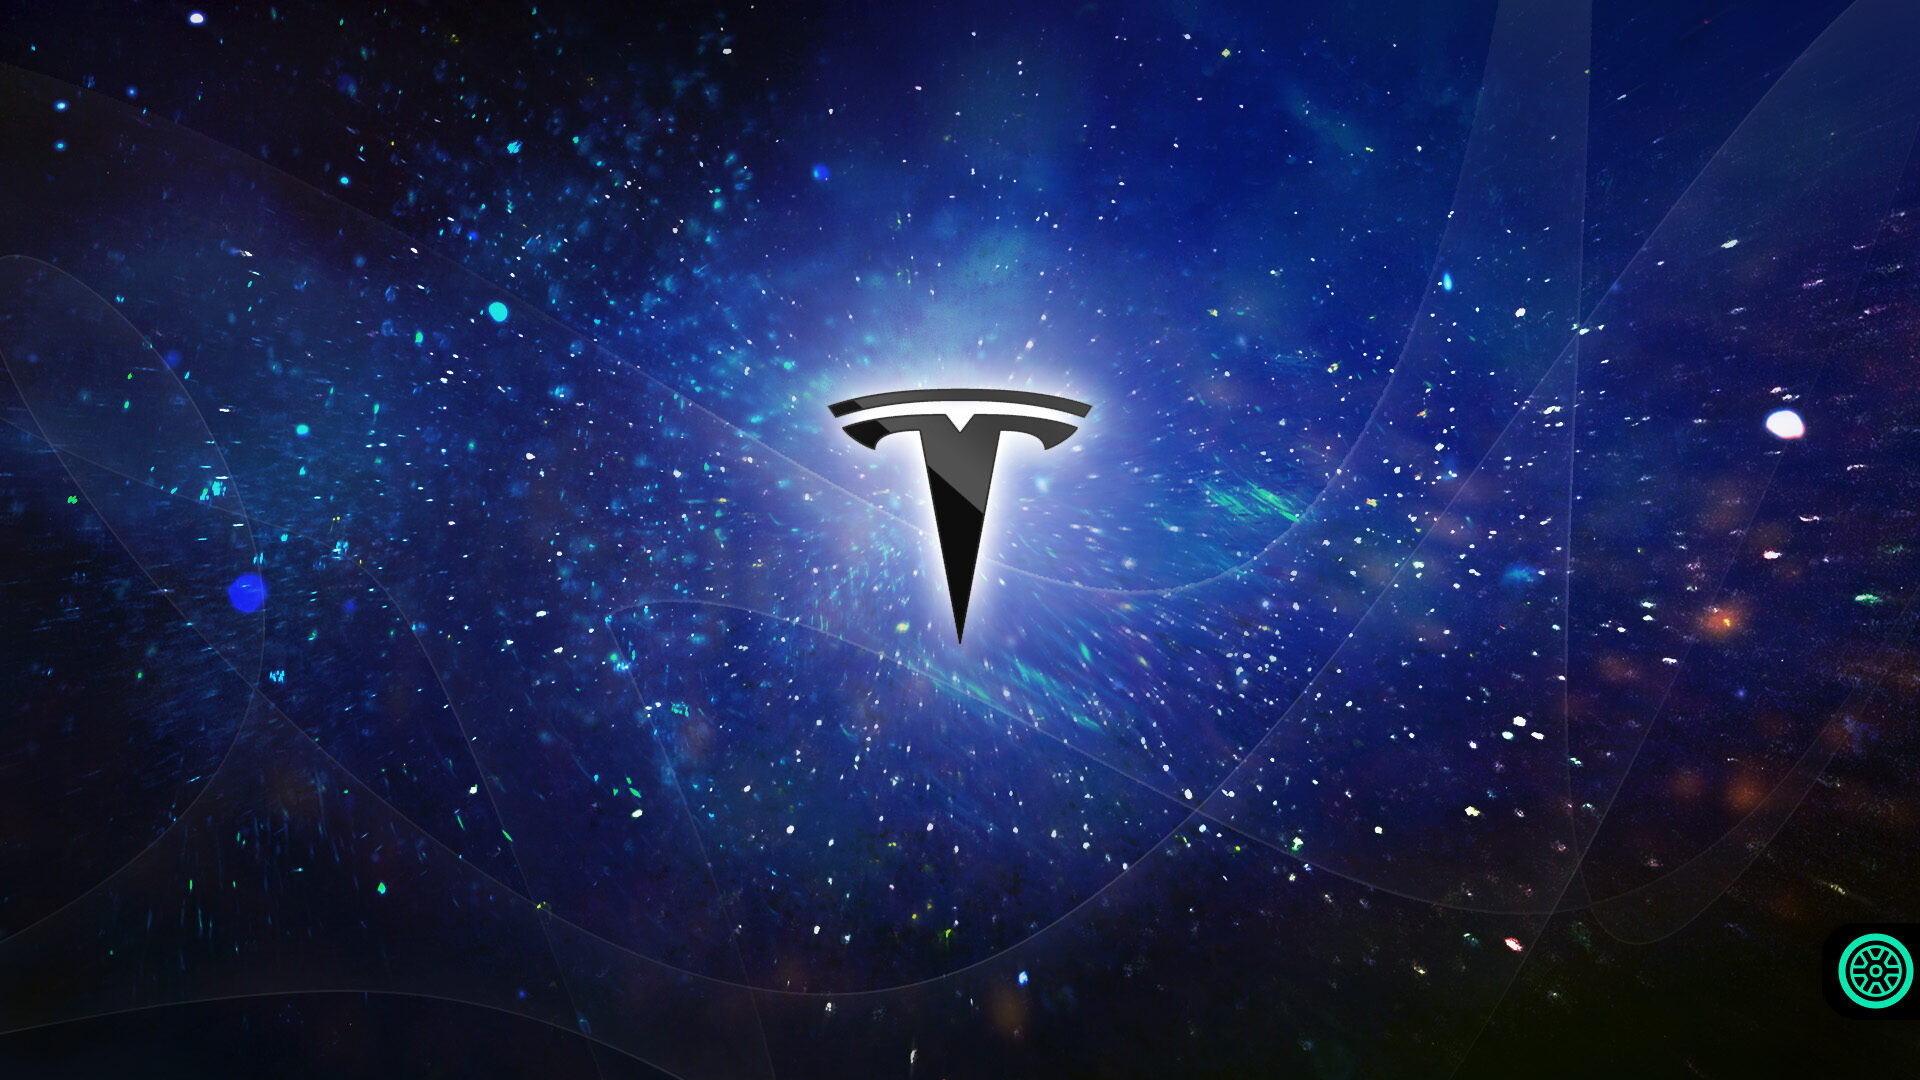 Tesla Megapack Pilleri test halindeyken alev aldı 1